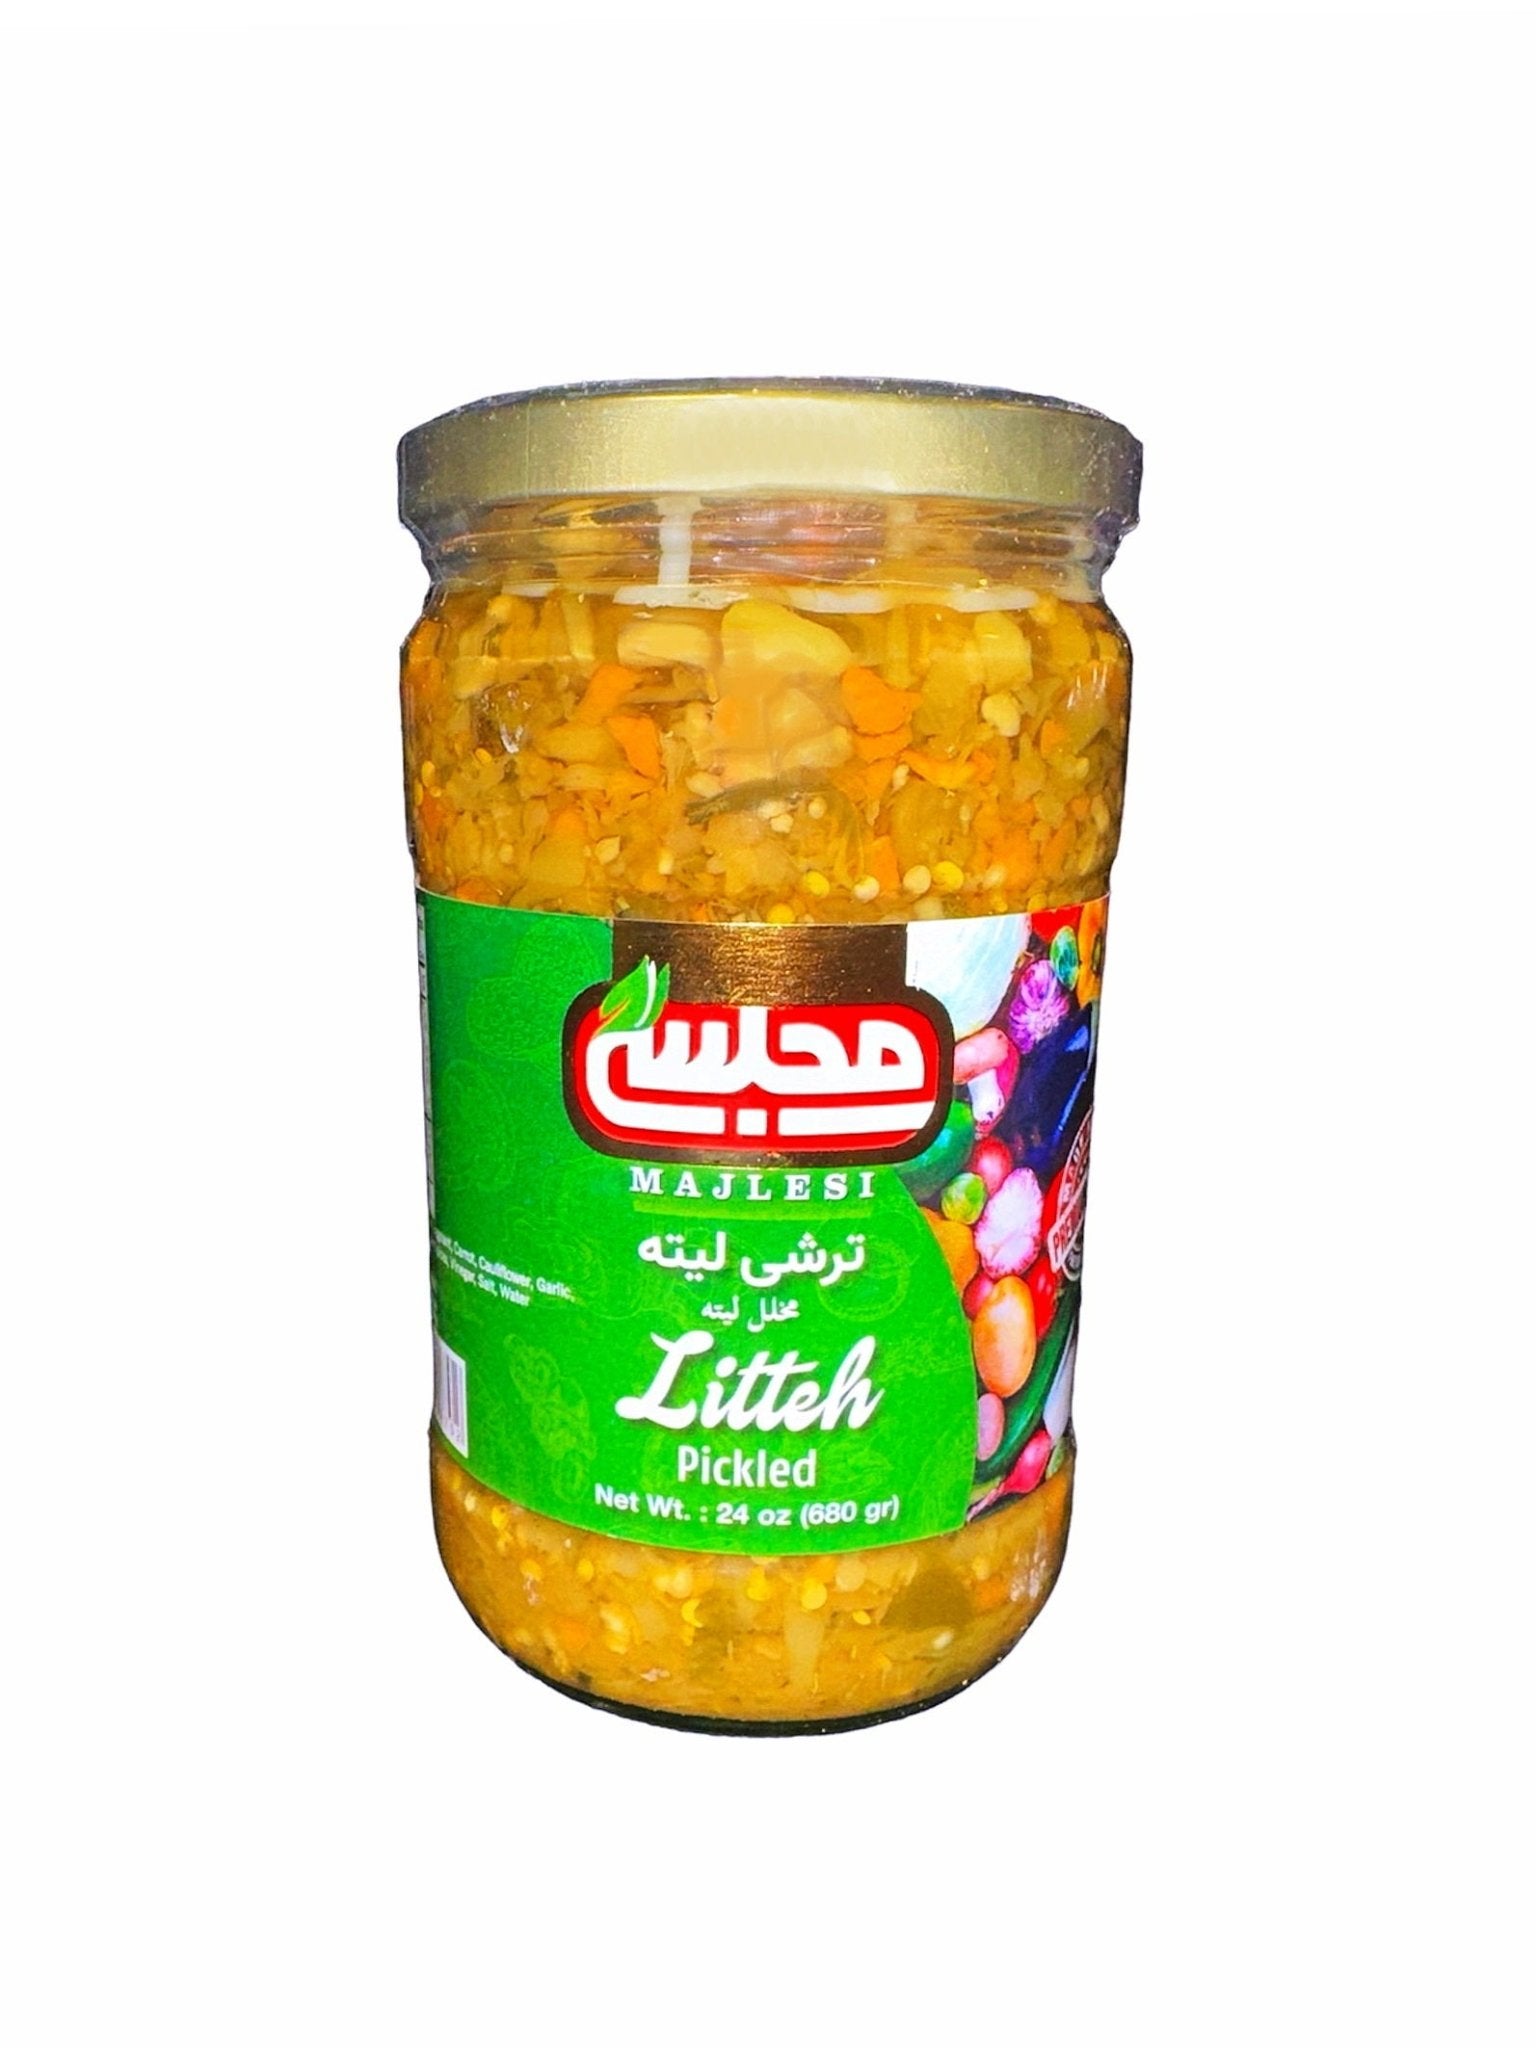 Liteh Pickle Majlesi (Torshi Liteh, Turshi, Leeteh)